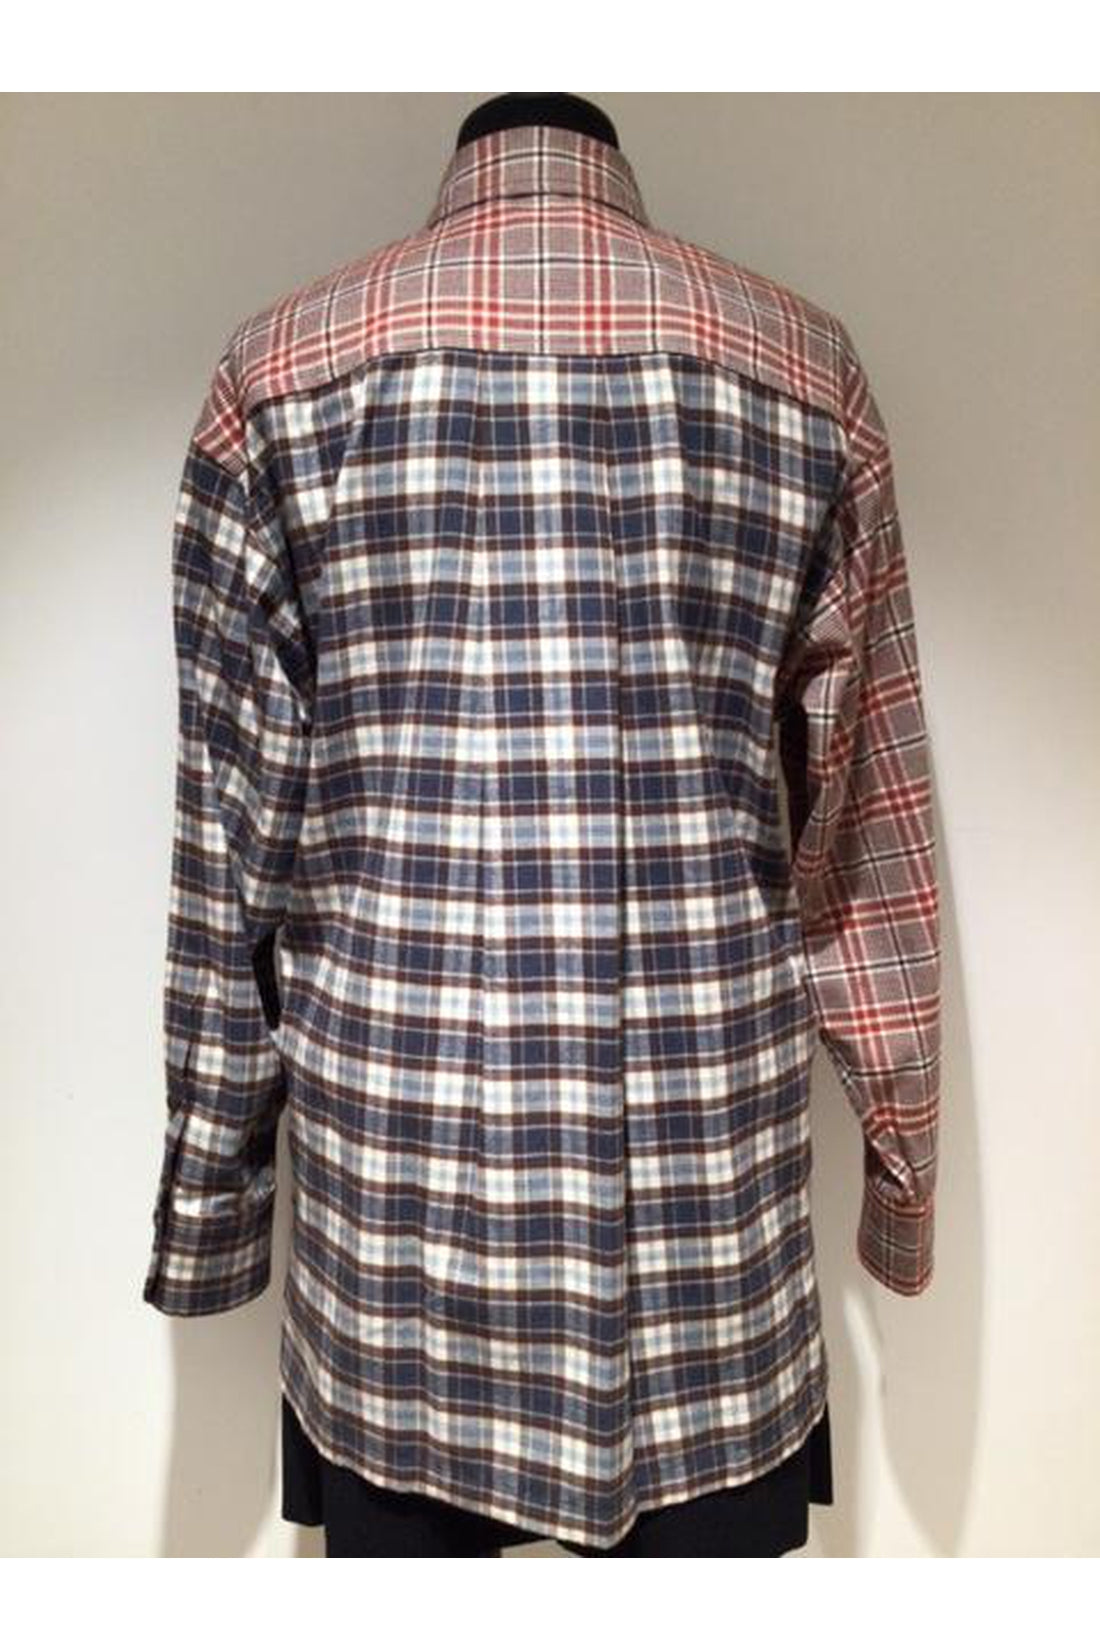 Kenzo-OUTLET-SALE-Oversize shirt-ARCHIVIST